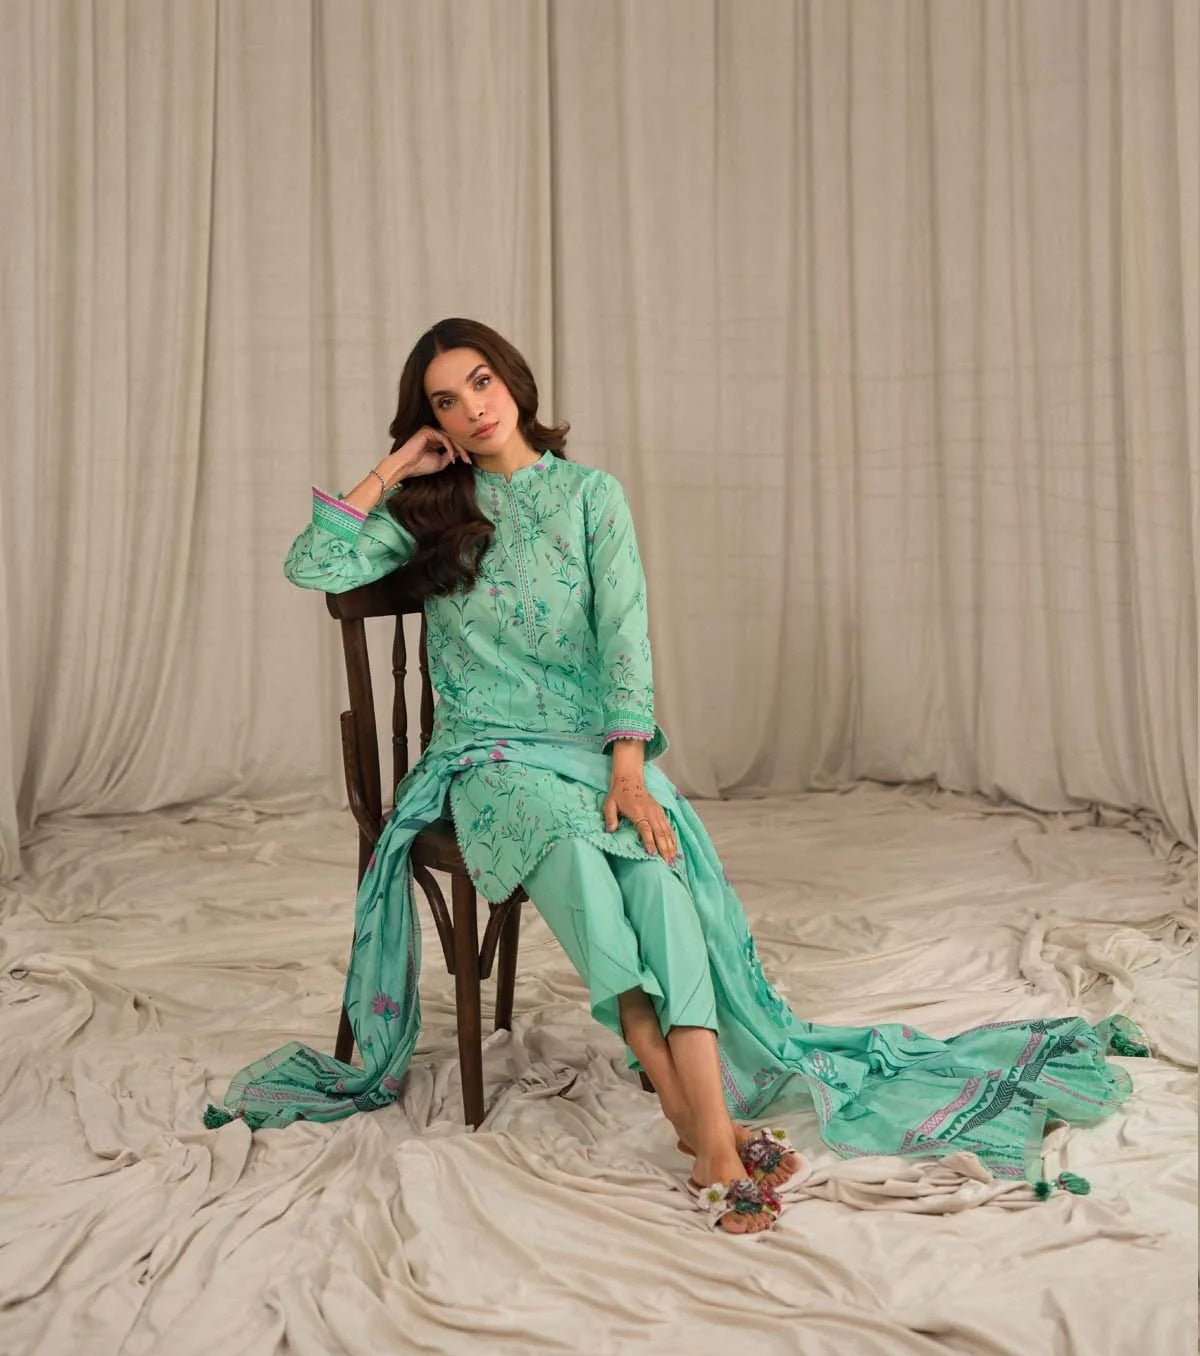 Sahar Printed Lawn Suits Unstitched 3 Piece SHR-S24-PL-V1-09 - Summer Collection